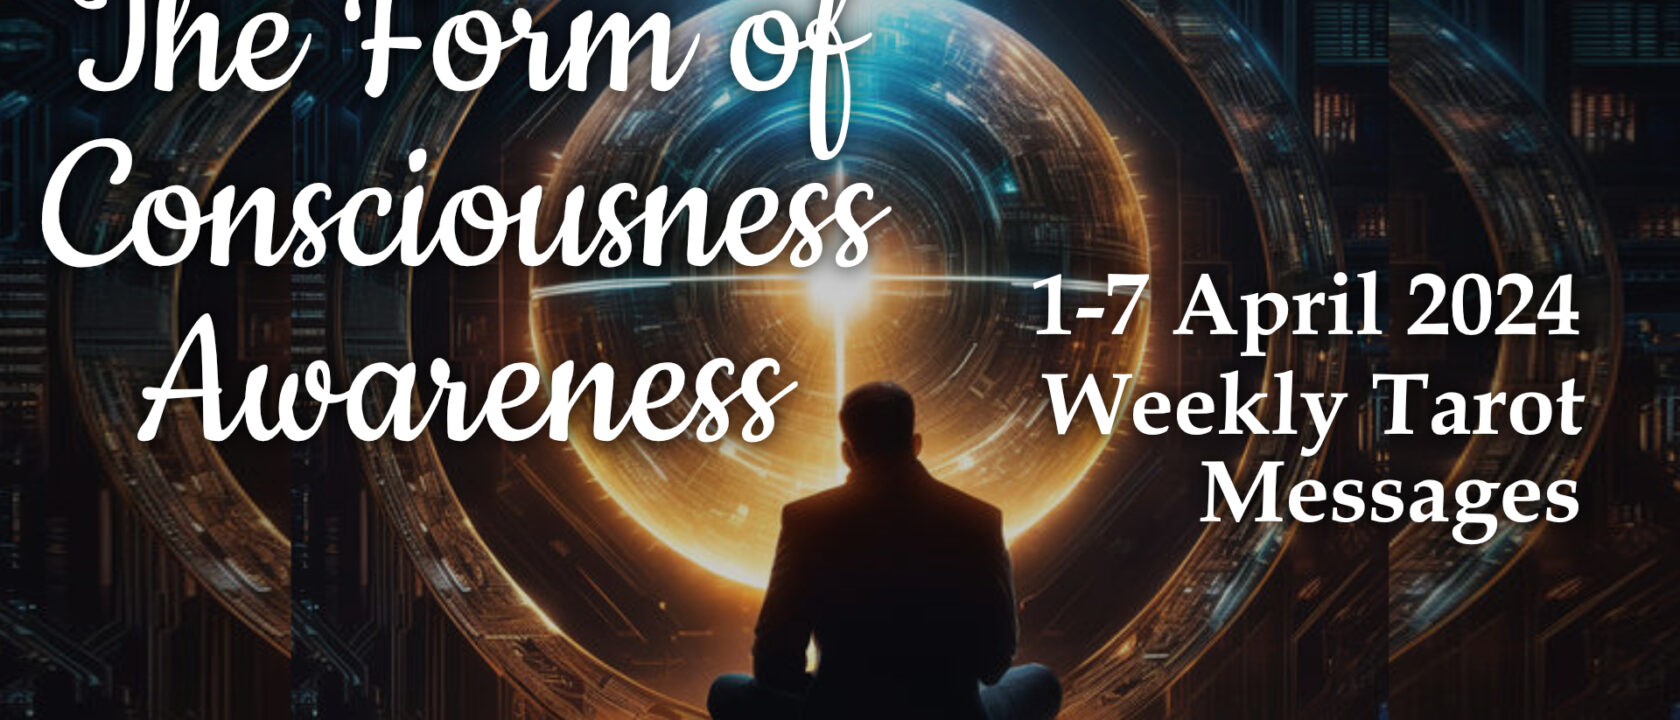 1-7 April 2024 Weekly Tarot Messages – The Form of Consciousness Awareness